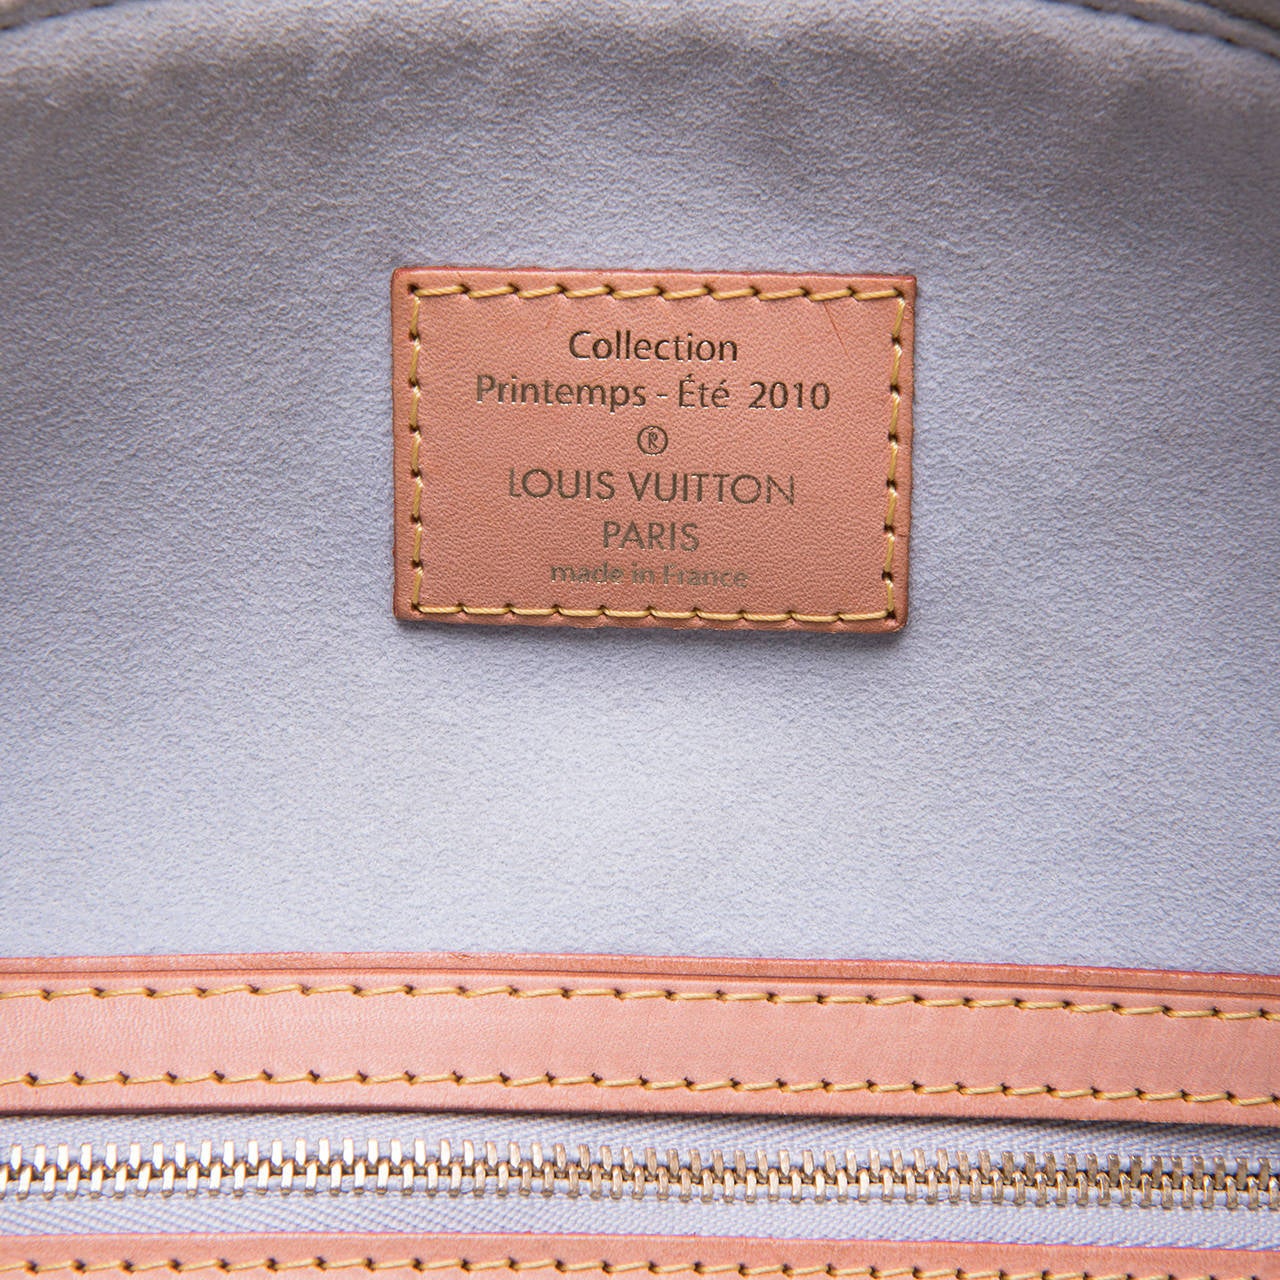 Sunburst crossbody bag Louis Vuitton Pink in Denim - Jeans - 37523734